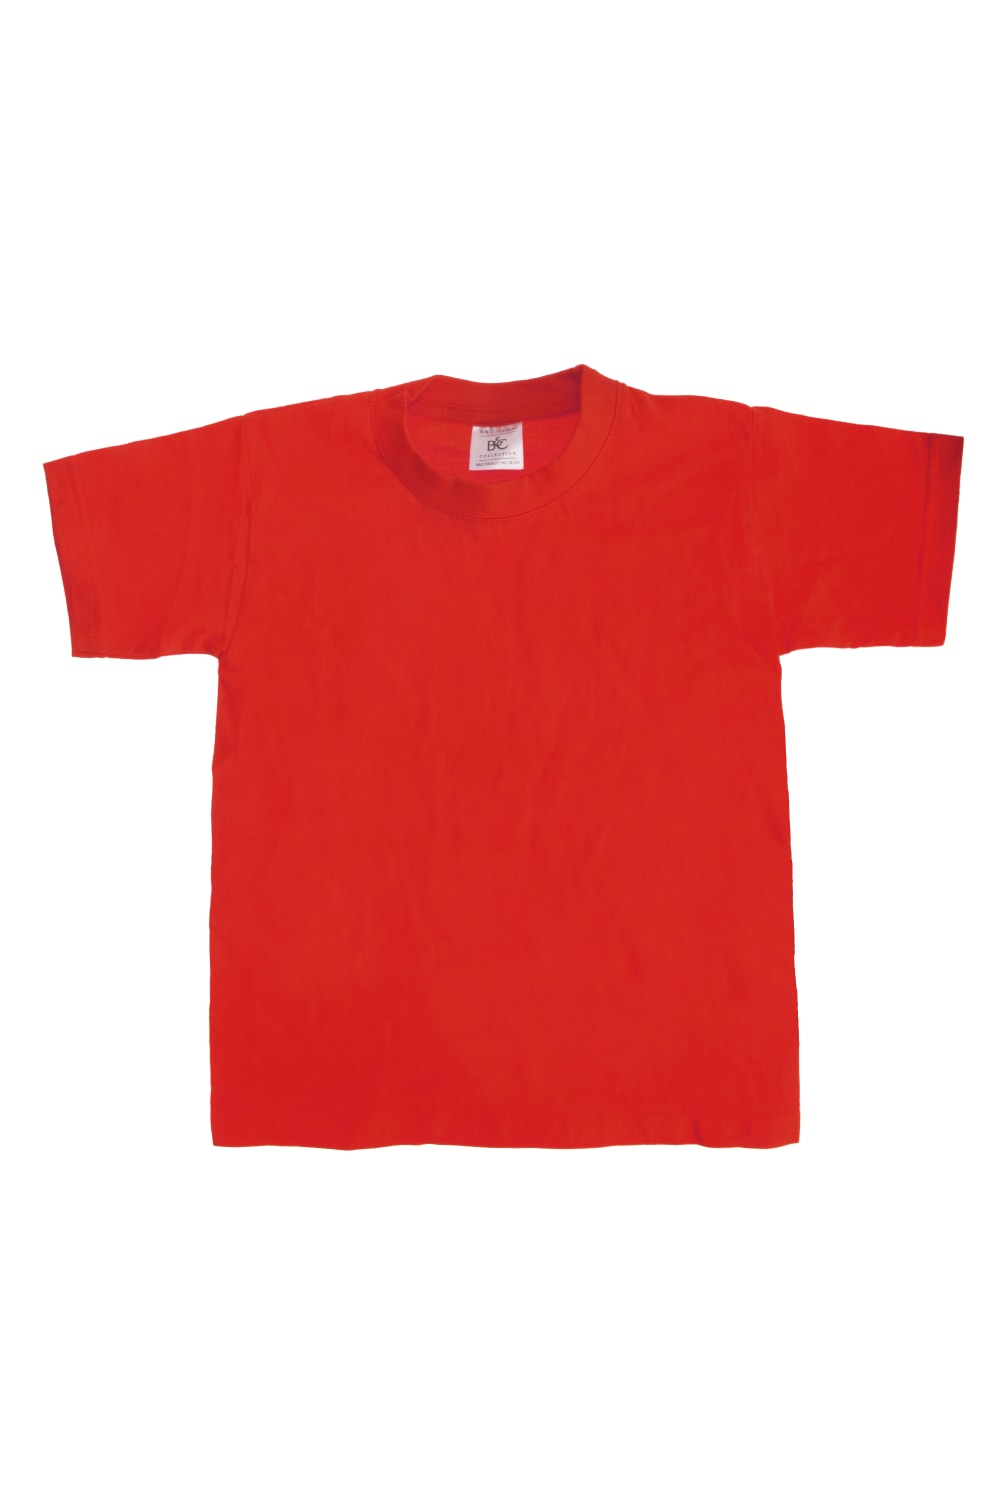 B&C Big Boys Kids/Childrens Exact 190 Short Sleeved T-Shirt (Red)